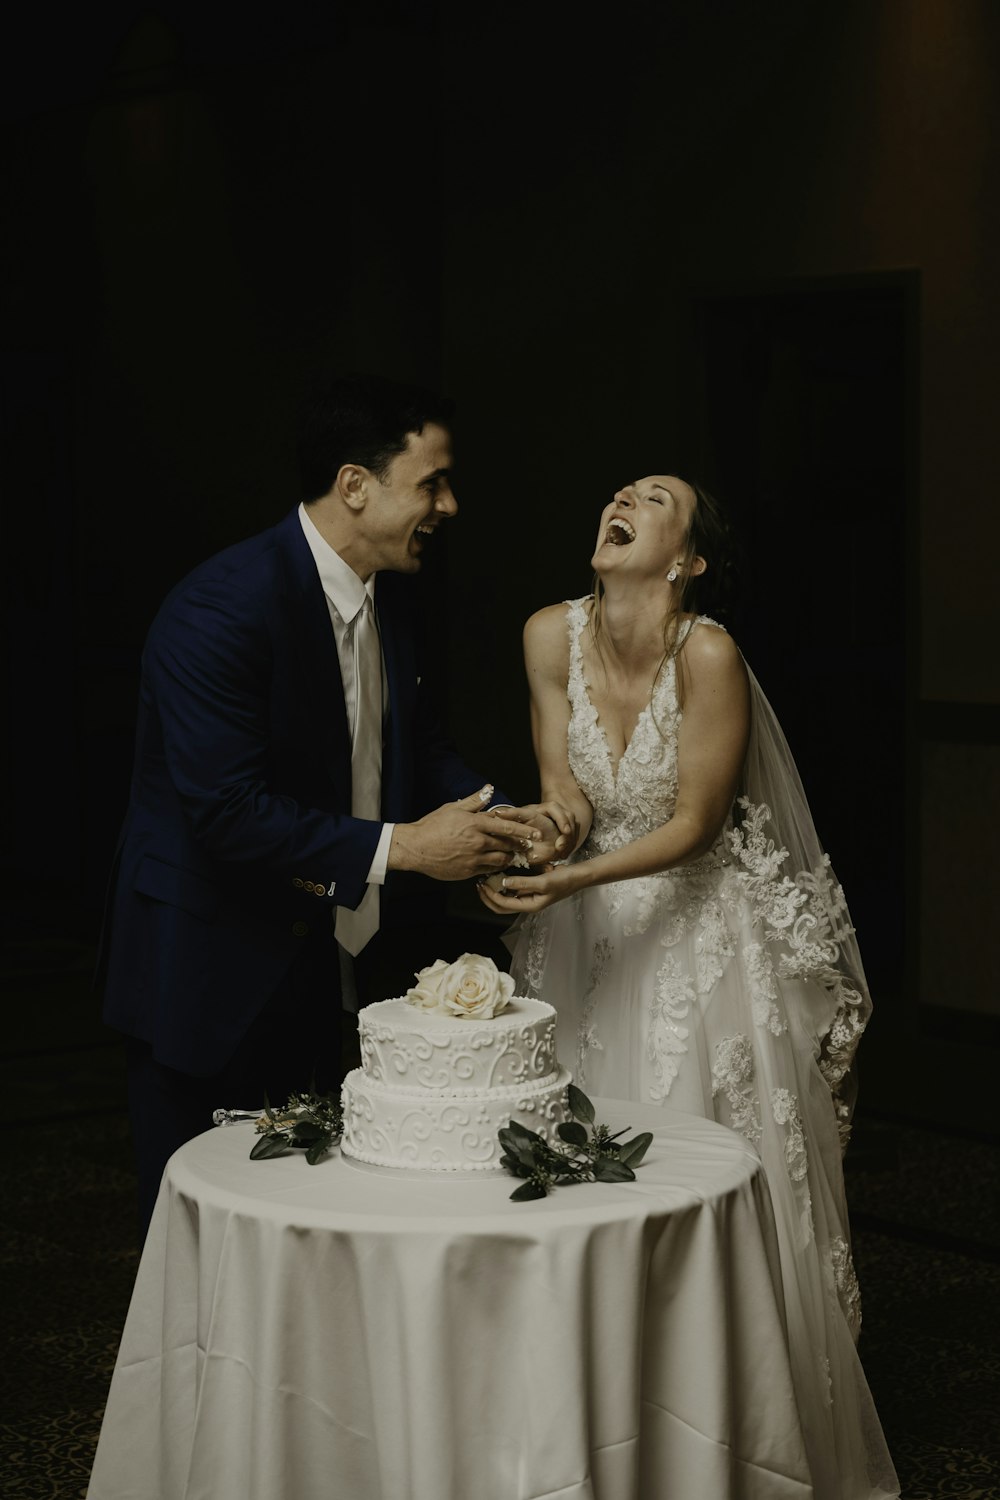 a man and woman cutting a wedding cake